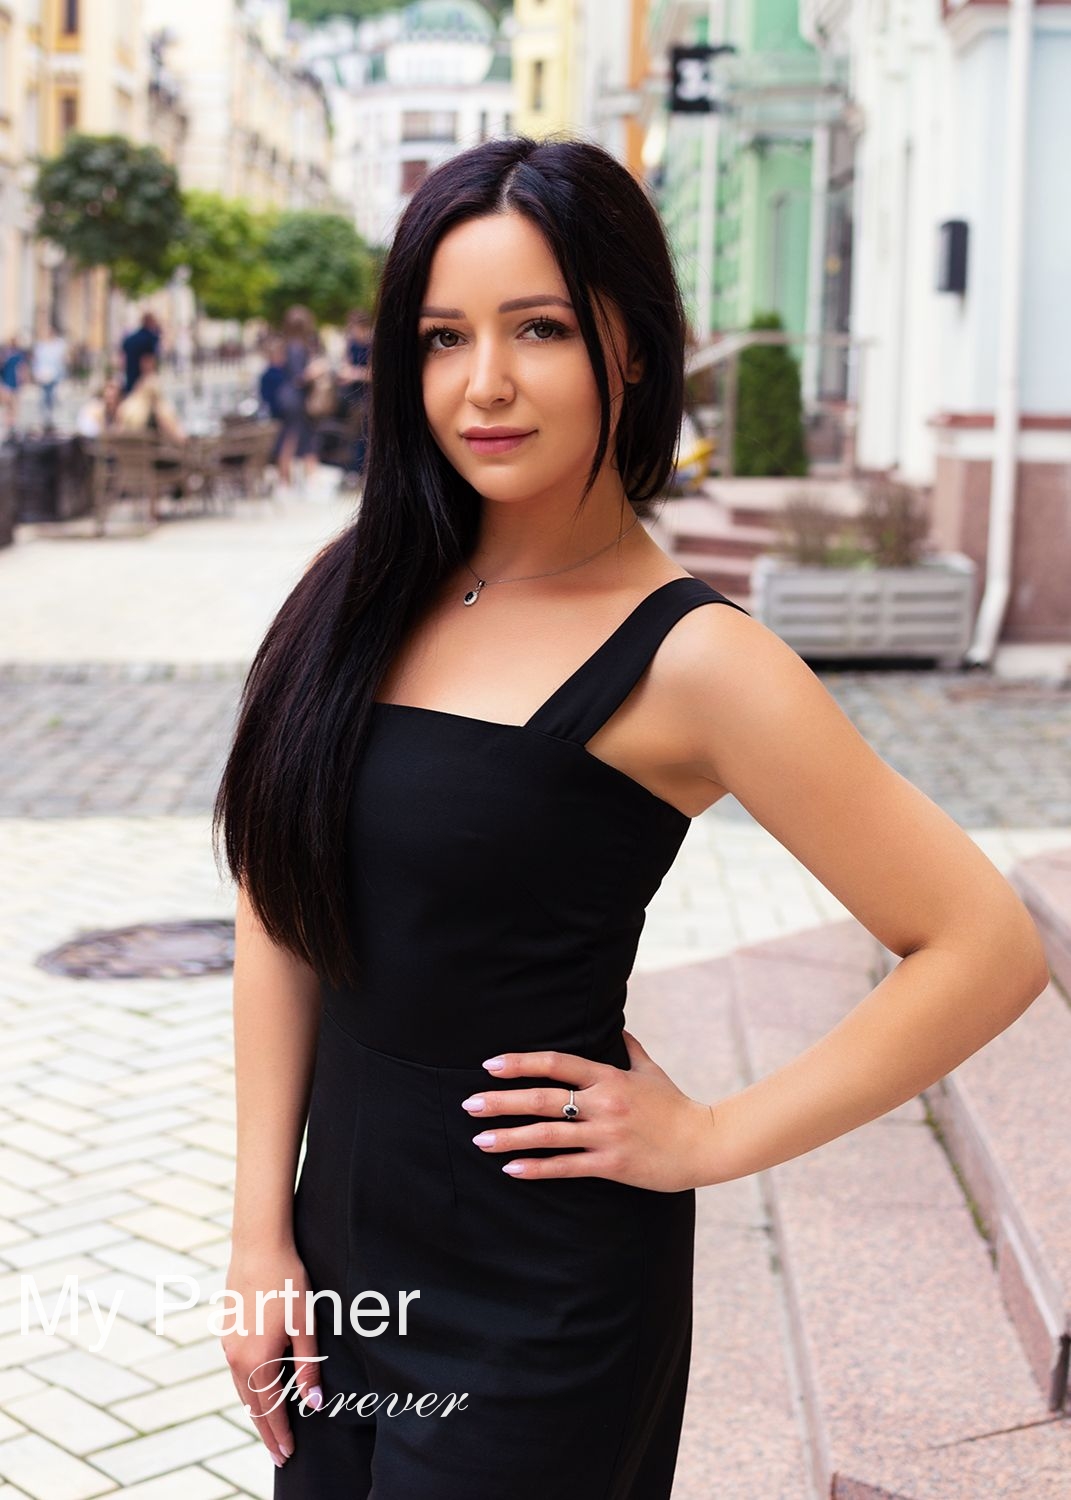 Dating Service to Meet Beautiful Ukrainian Lady Polina from Kiev, Ukraine